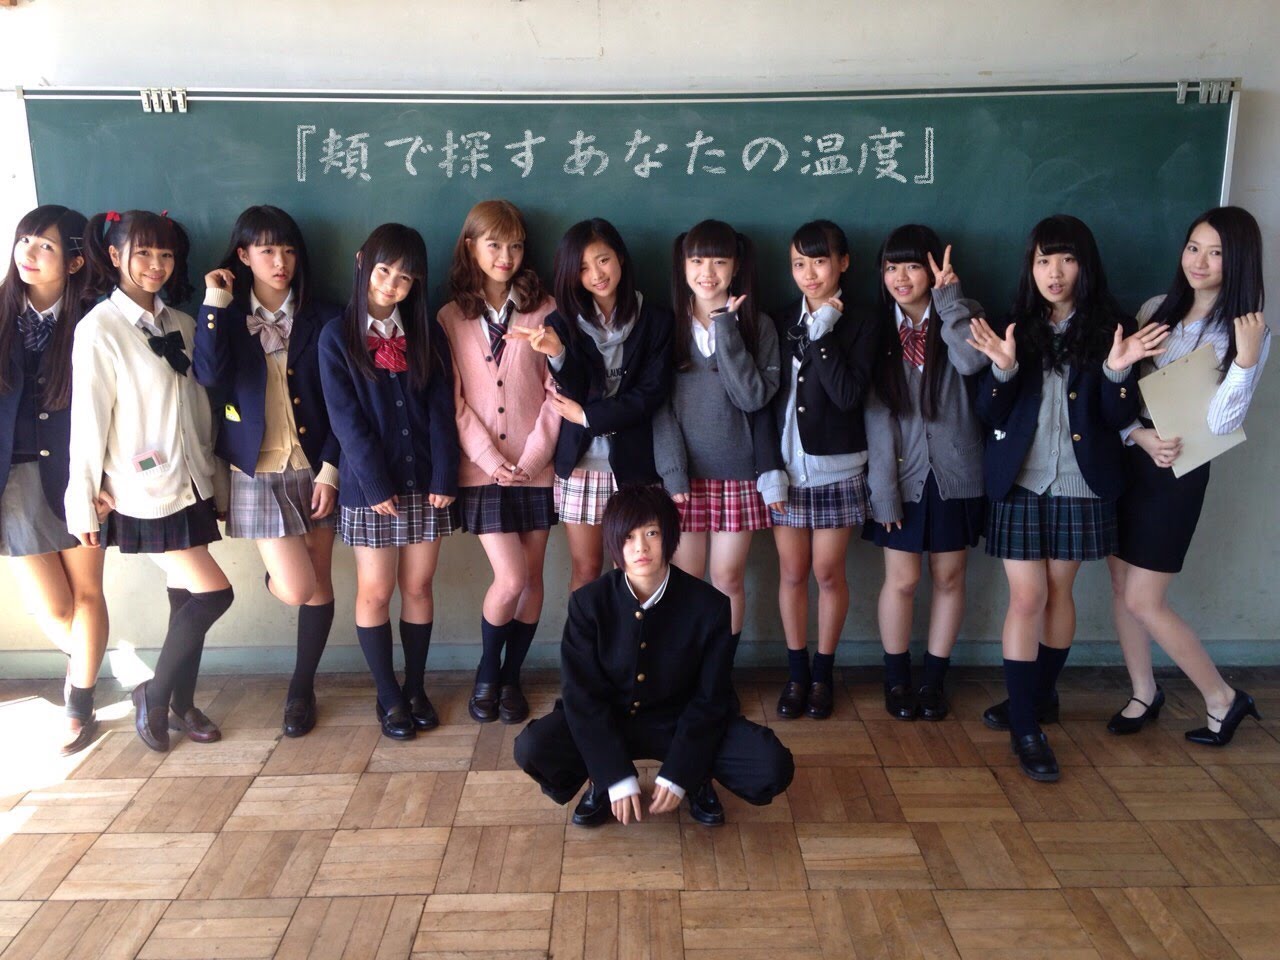 KissBee Tell a Bittersweet School Love Story in the MV for “Ho de Sagasu Anata no Ondo”